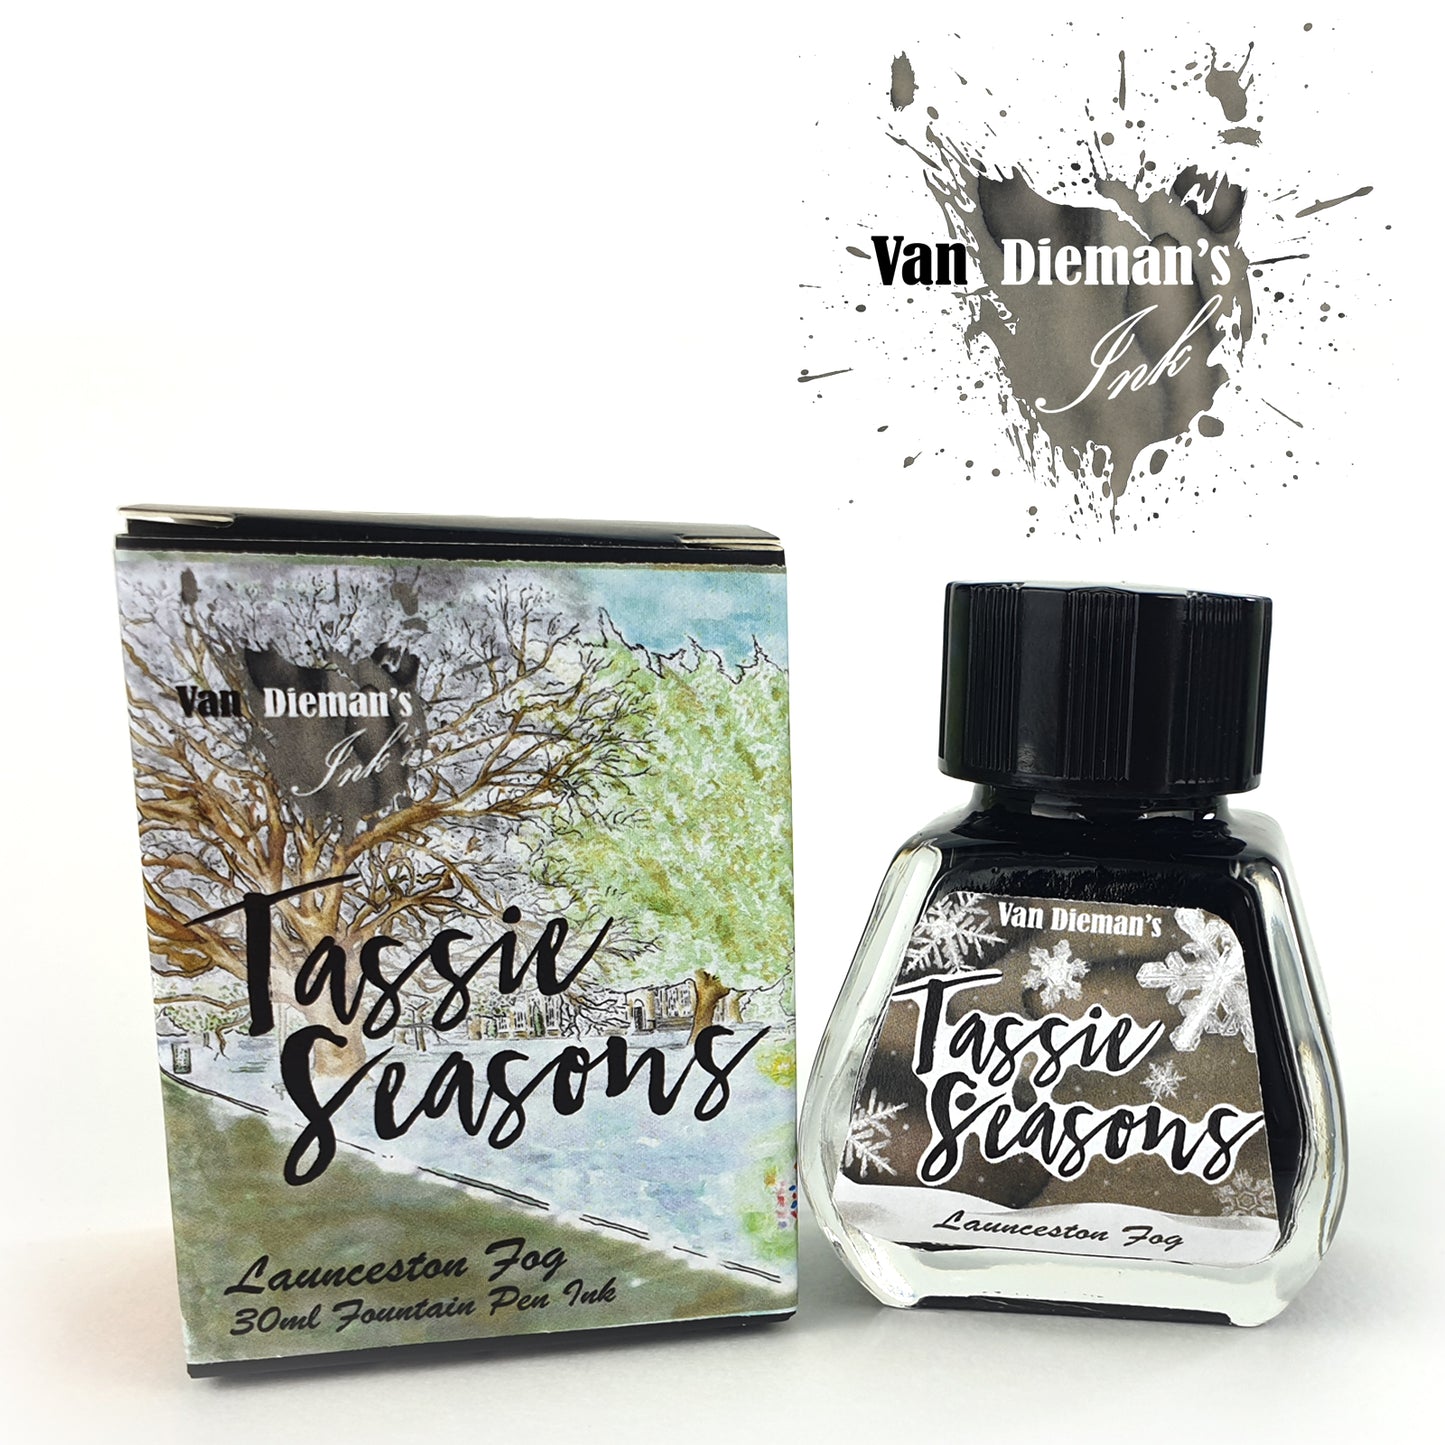 Van Dieman's Tassie Seasons (Winter) Launceston Fog - Fountain Pen Ink